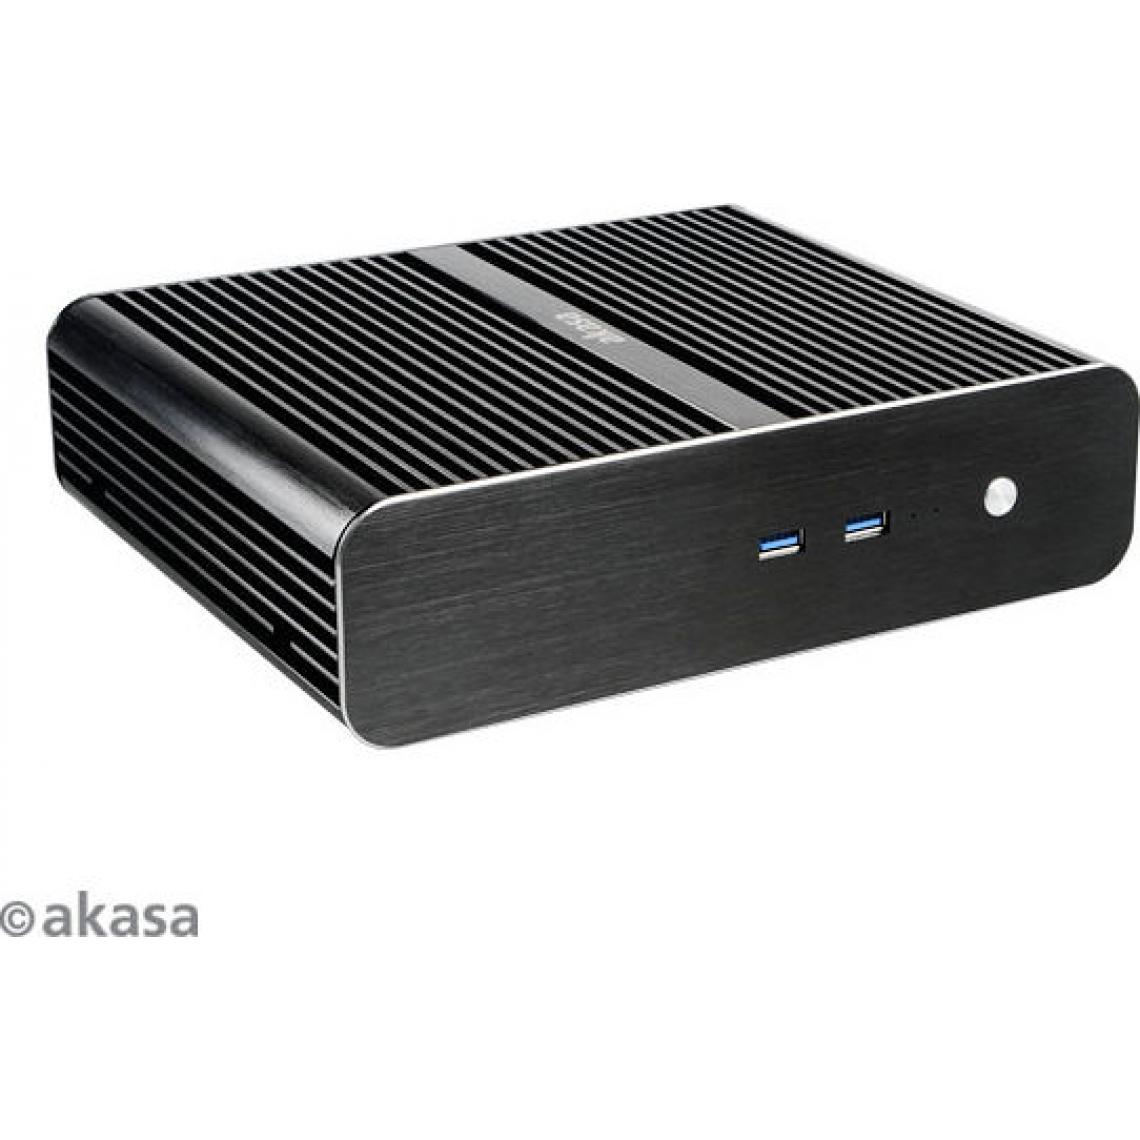 Akasa - Euler S sans ventilateur Thin-Mini-ITX, OEM - noir - Boitier PC